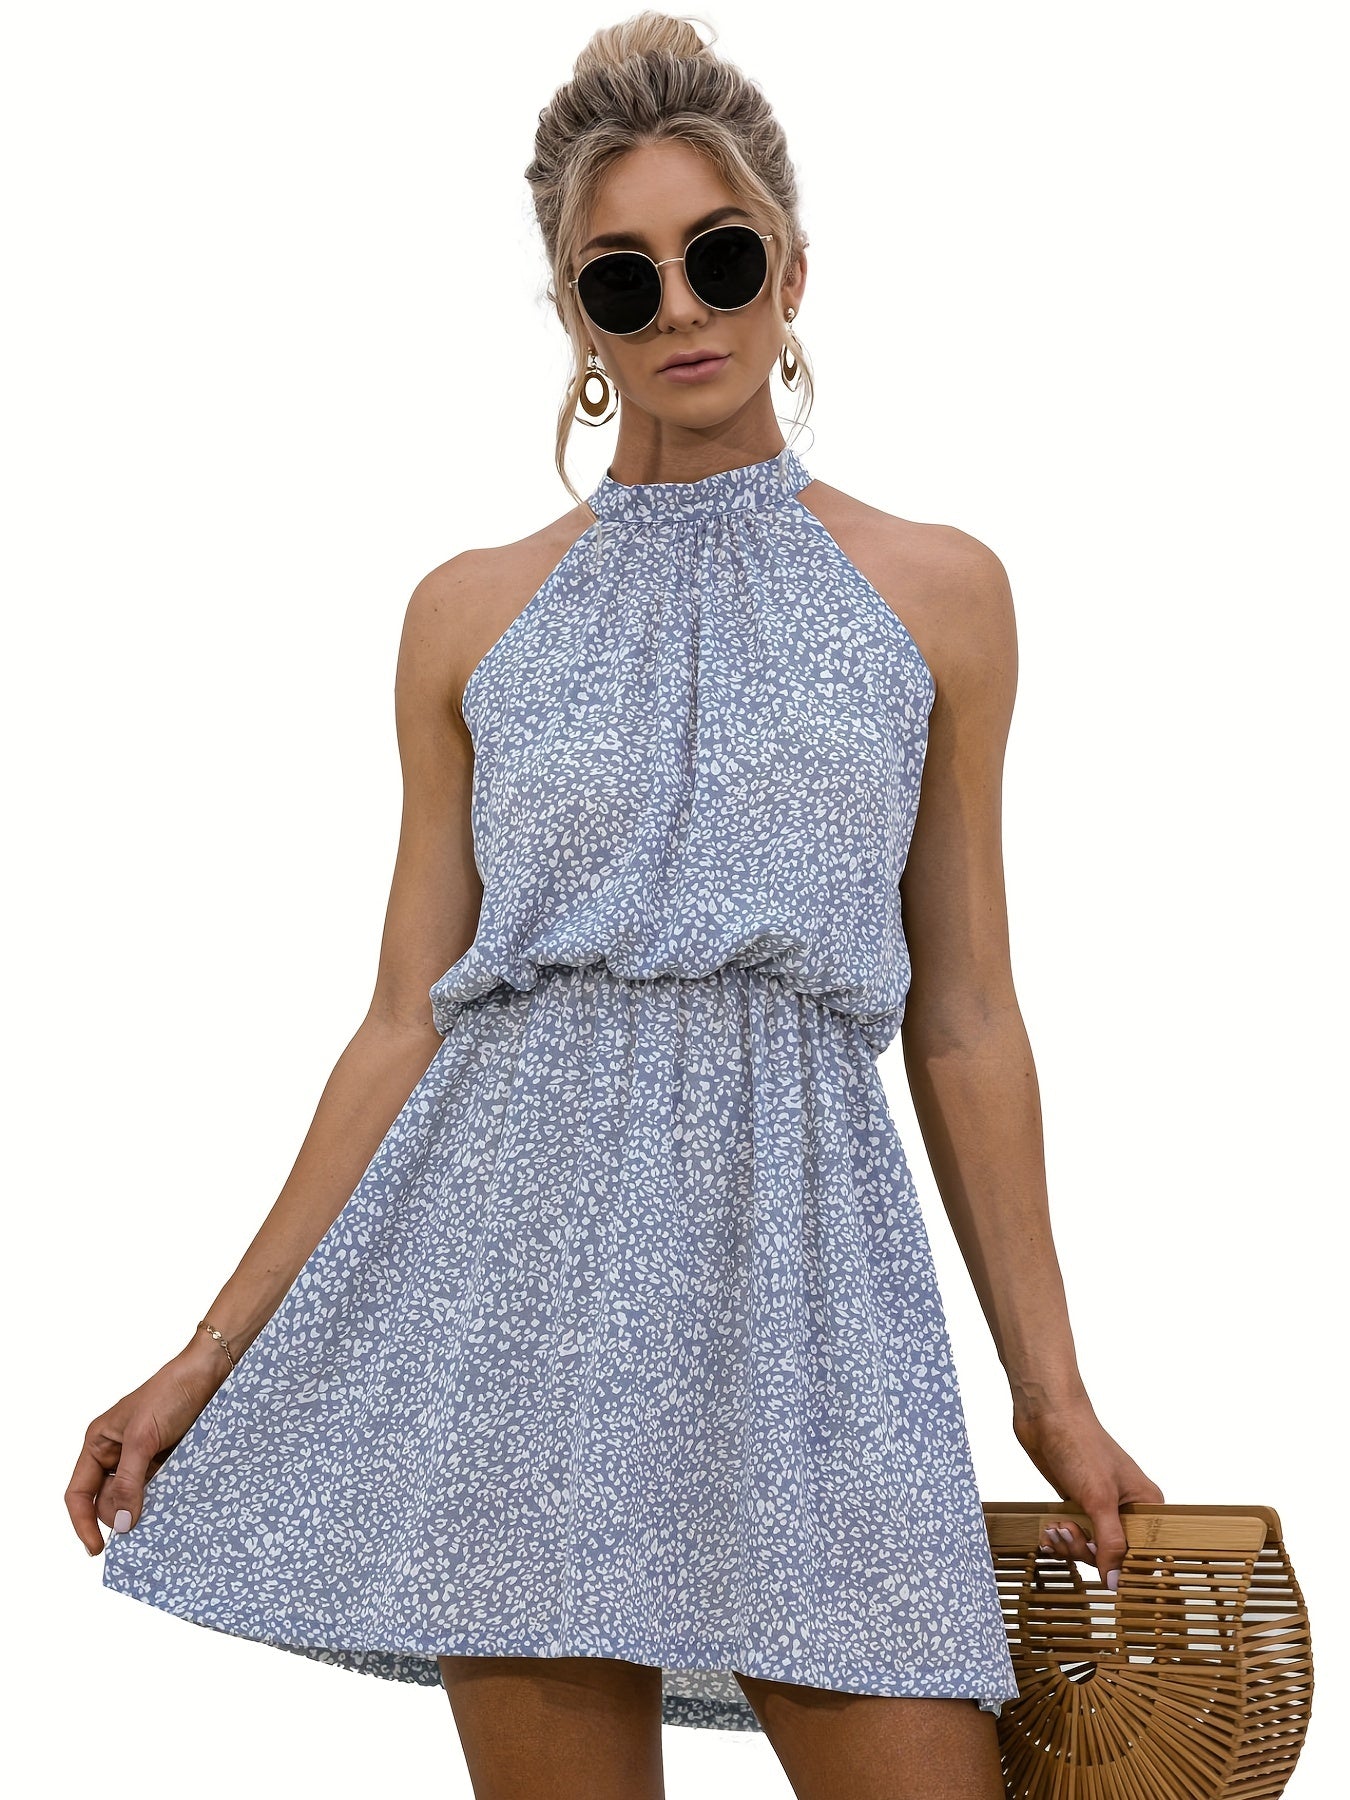 Vzyzv Floral Print Halter Neck Dress, Sexy Sleeveless Dress For Spring & Summer, Women's Clothing